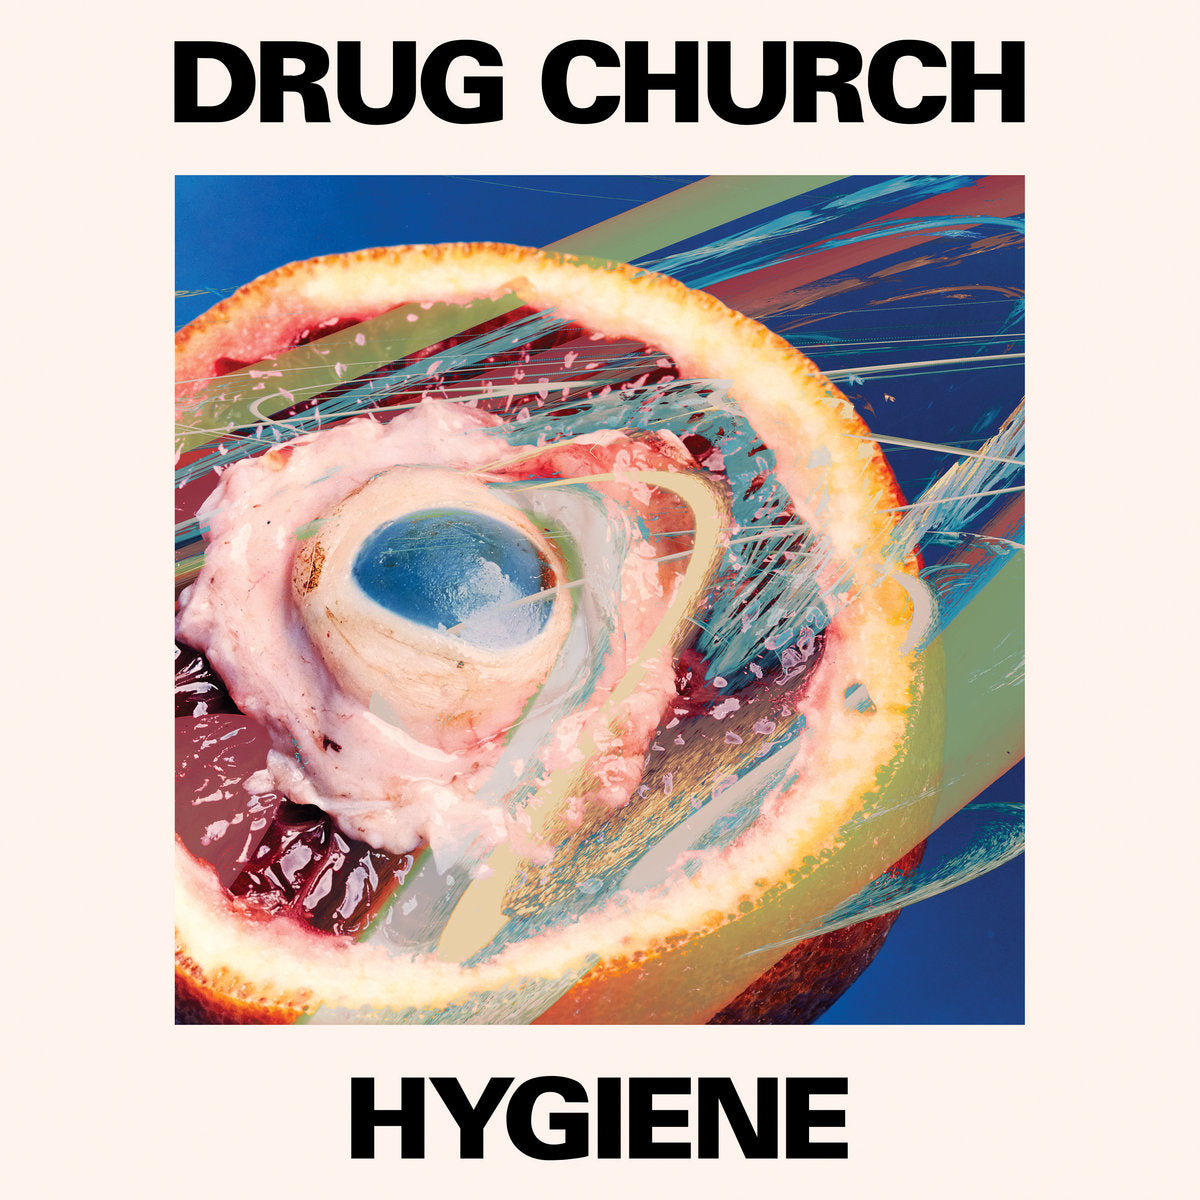 Drug Church "Hygiene" CD